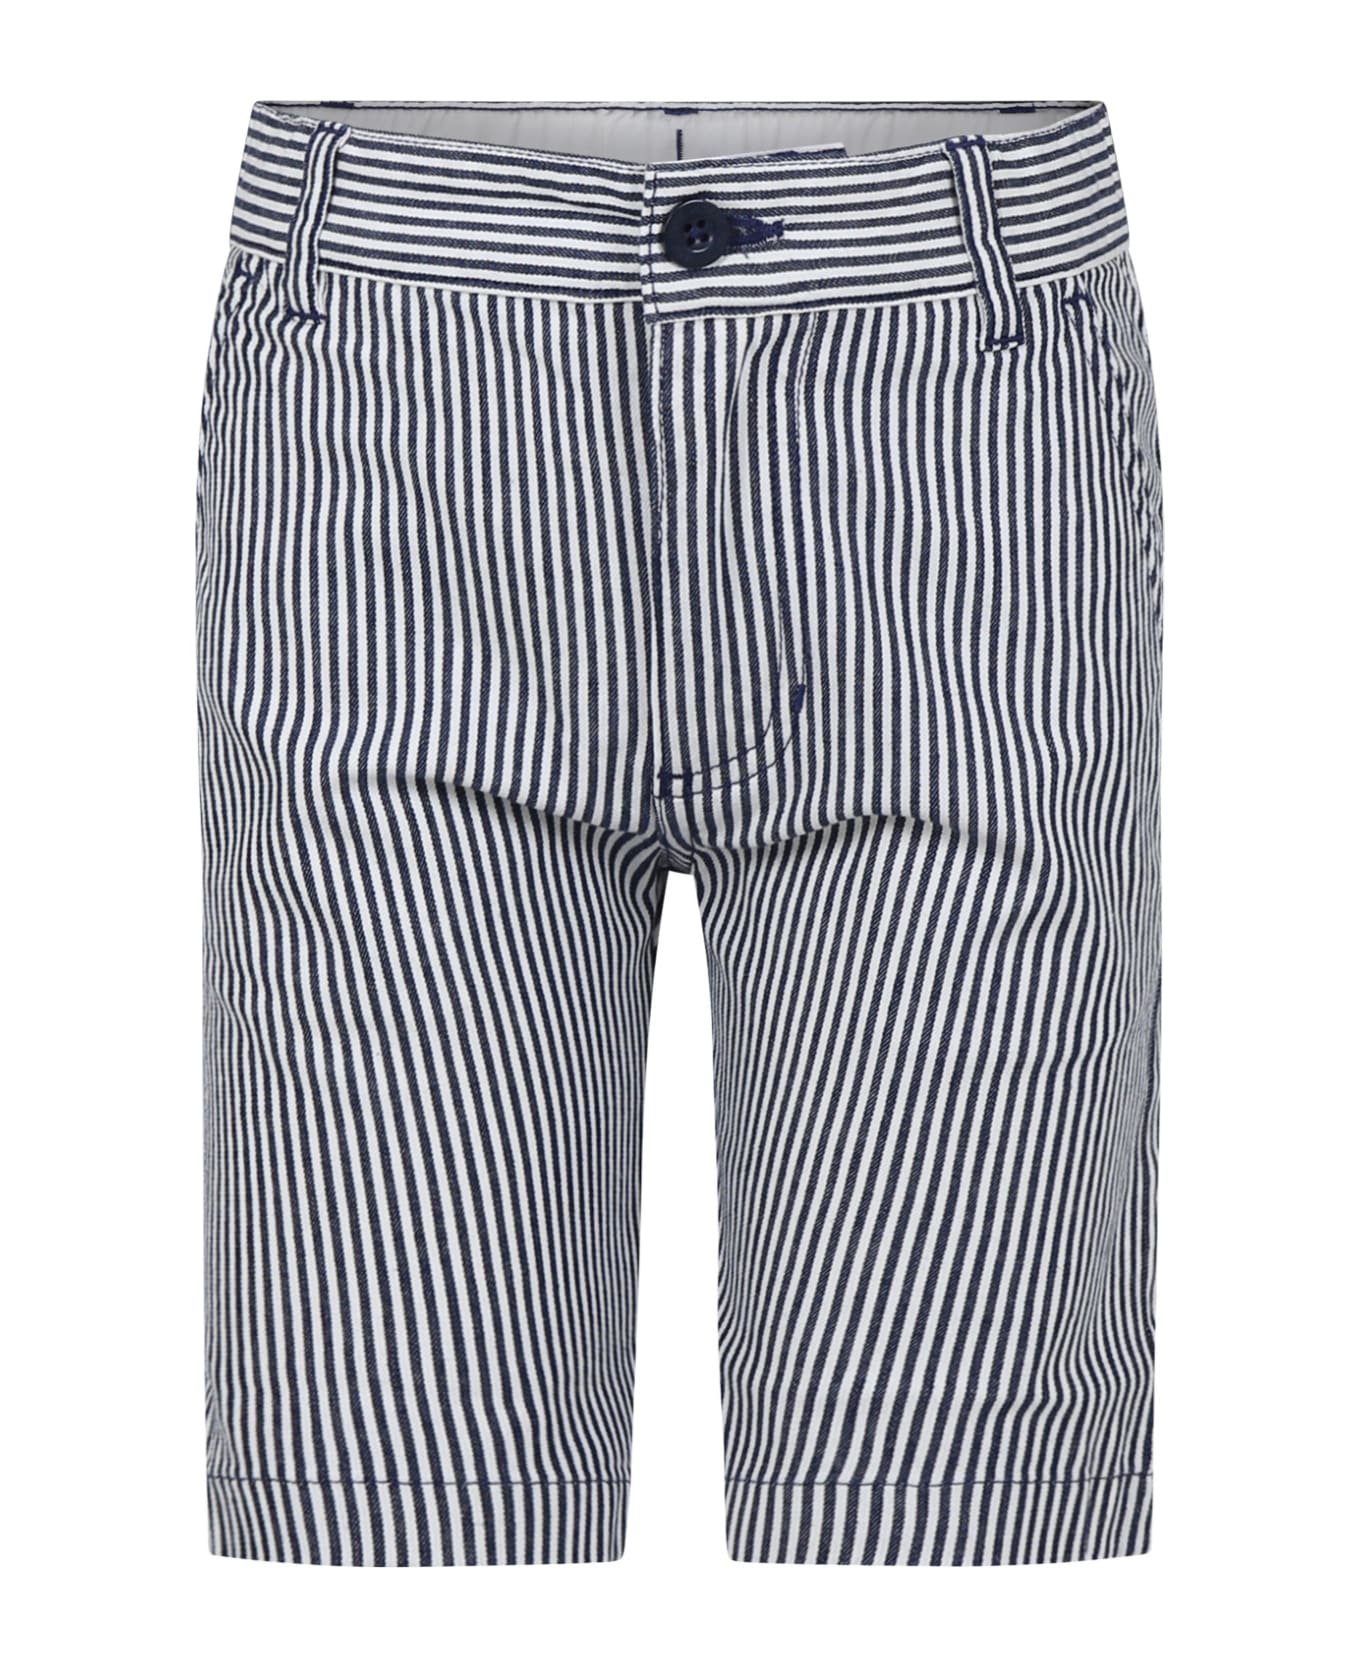 Petit Bateau Blue Shorts For Boy With Stripes - Blue ボトムス